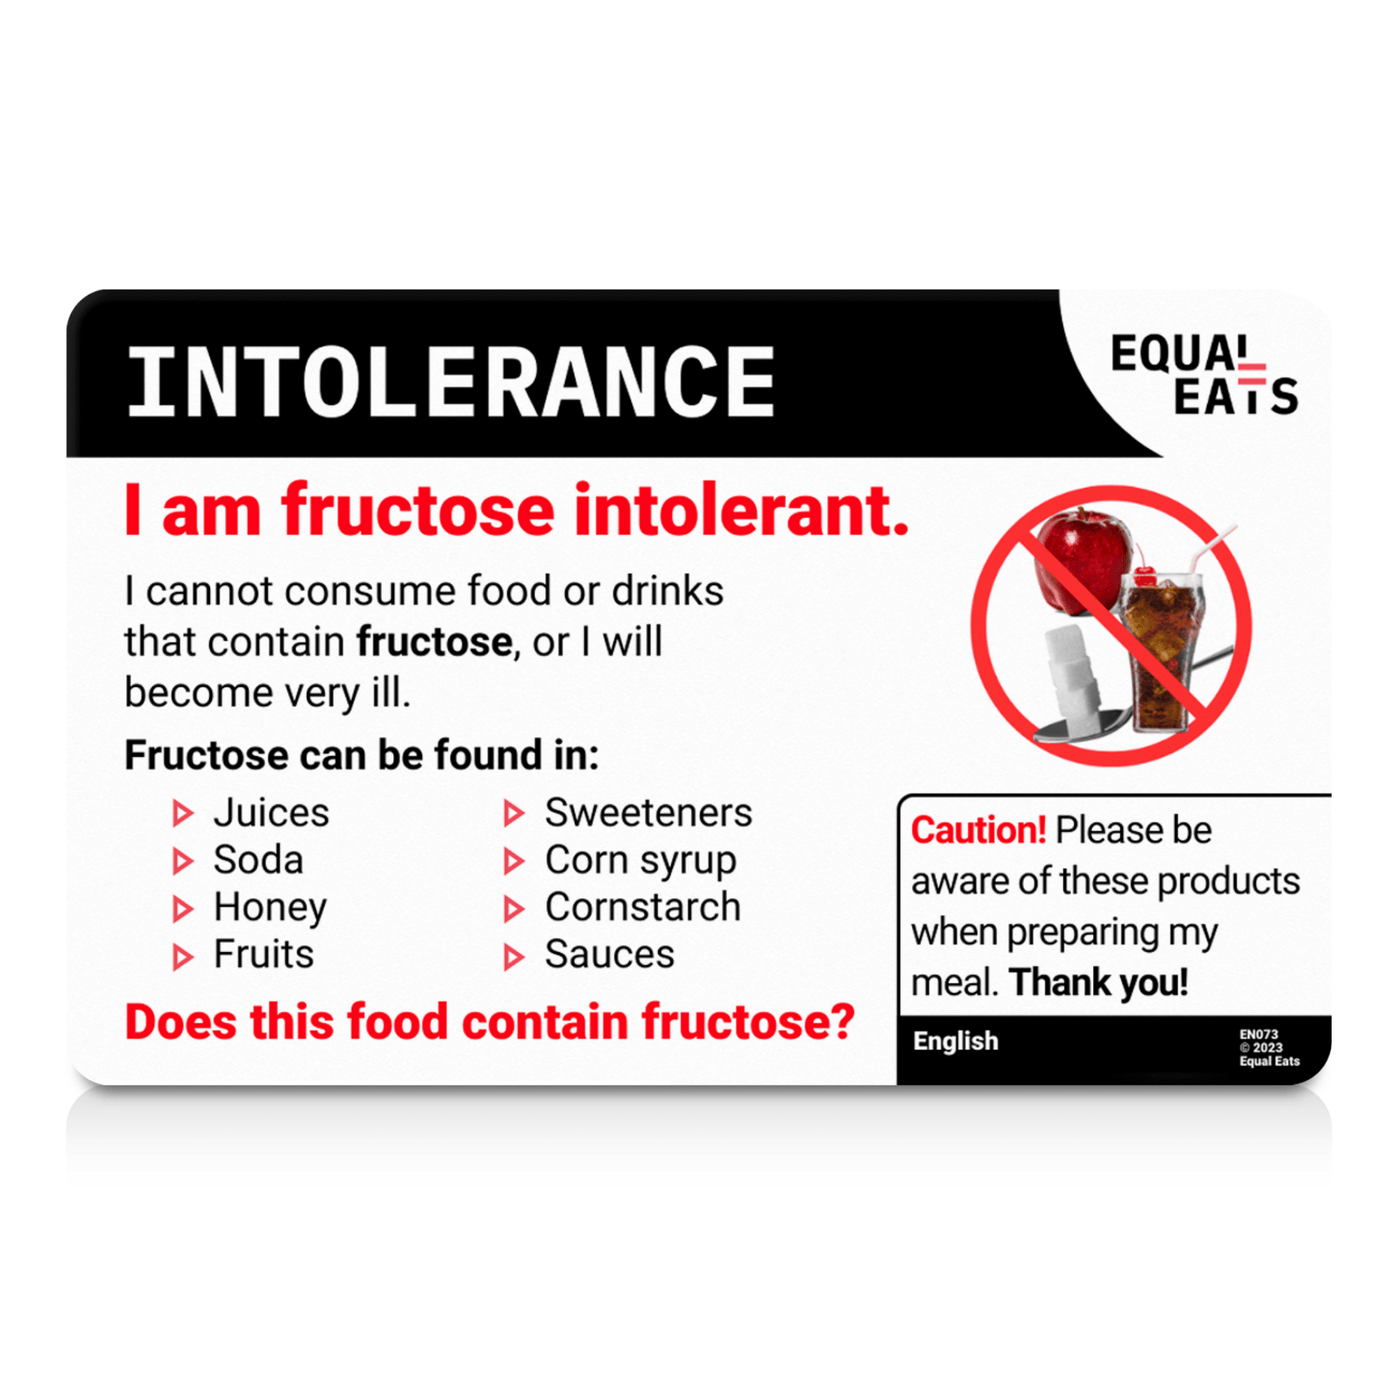 Czech Fructose Intolerance Card